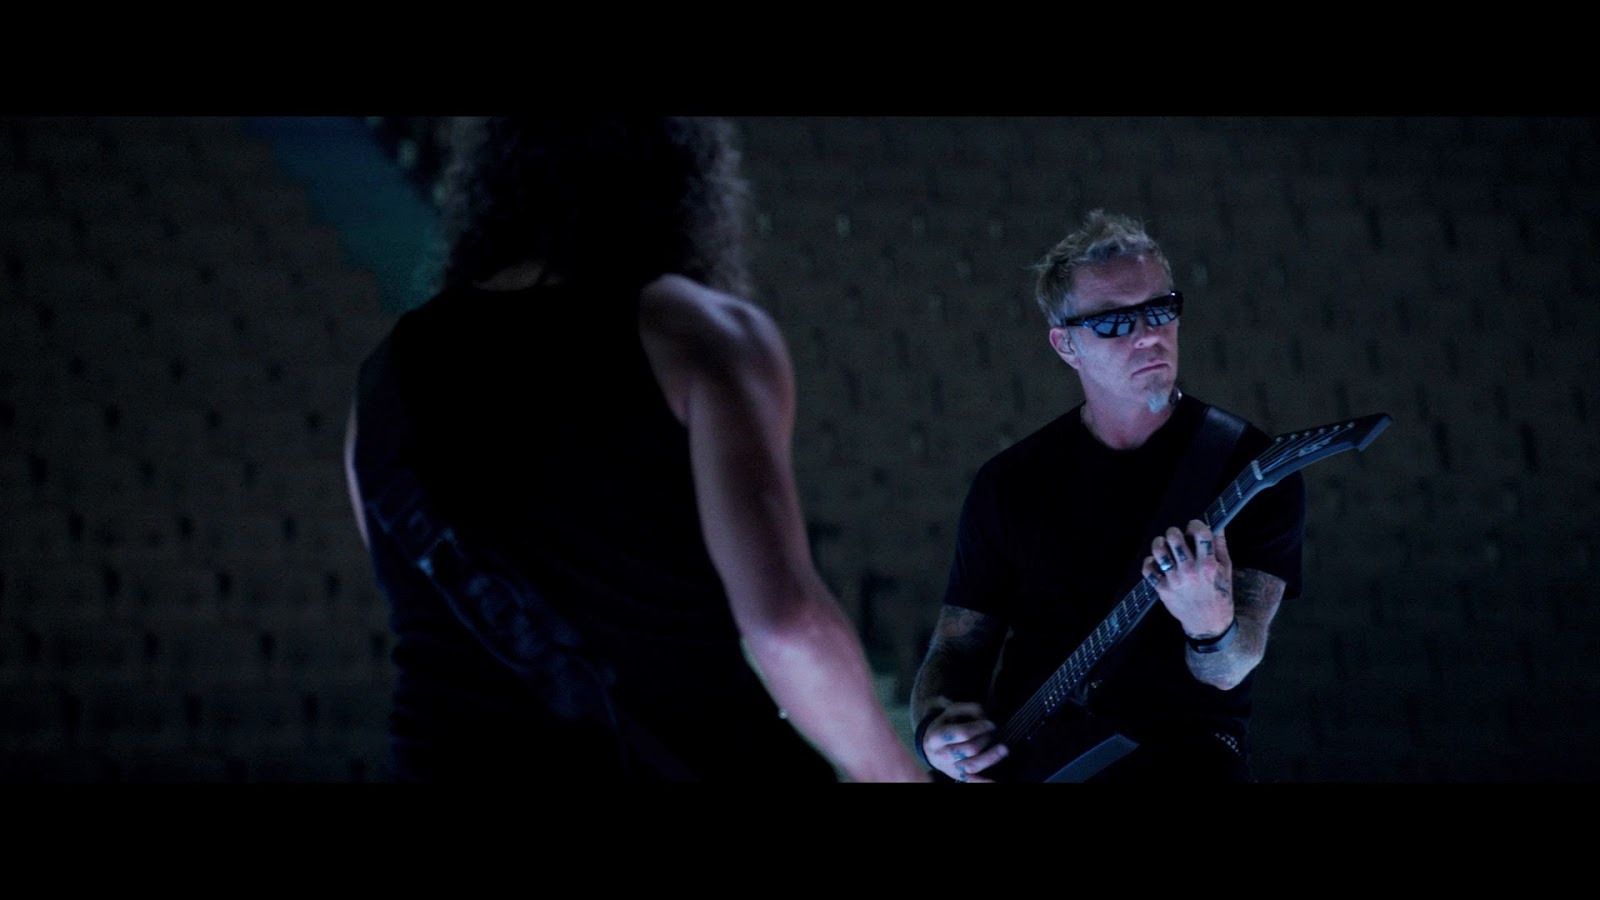 Metallica+Through+the+Never+%282013%29+1080p+BDRemux+-+Descargatepelis.com.mkv_snapshot_01.25.50_%5B2020.01.14_14.23.37%5D.jpg (1600×900)